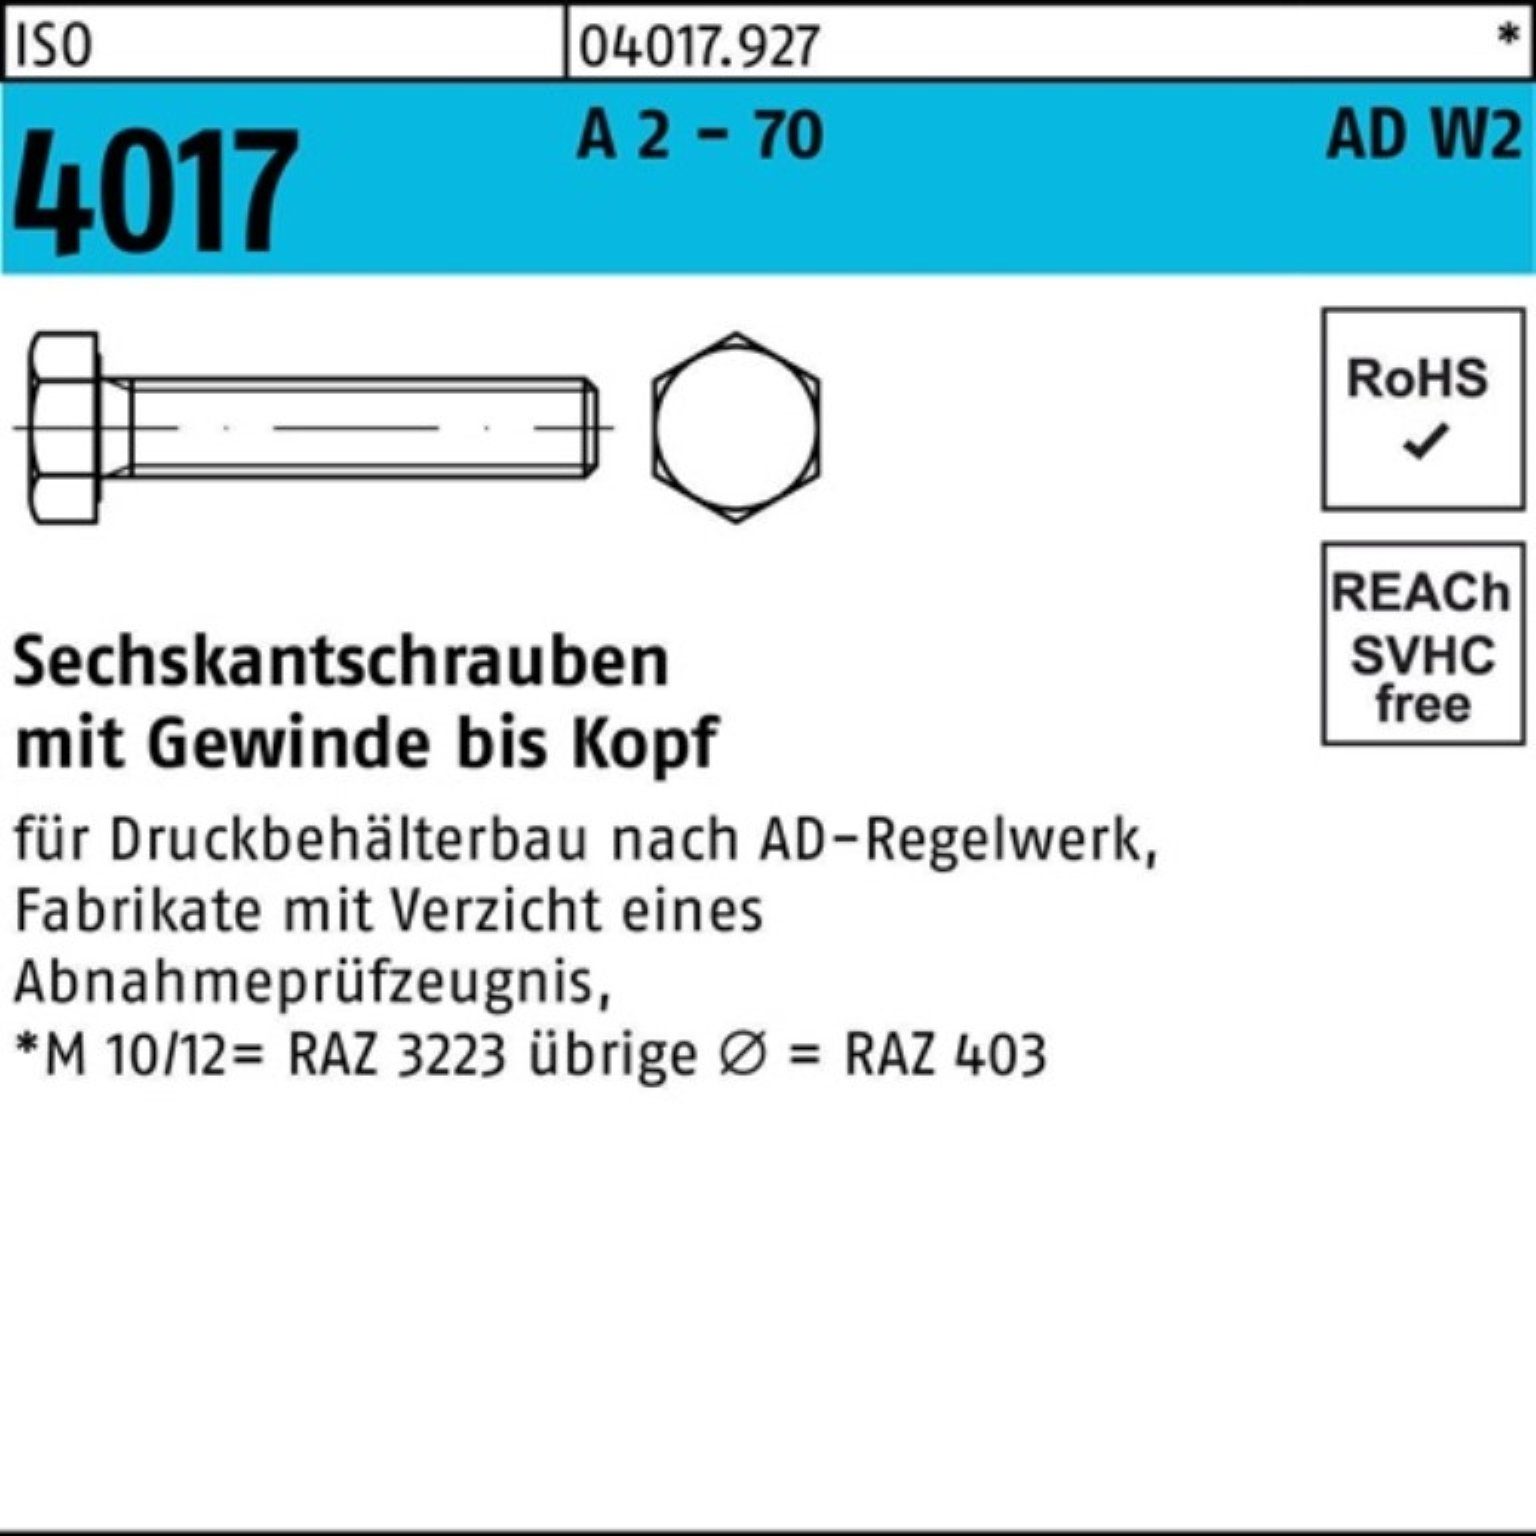 Bufab Sechskantschraube 100er Pack Sechskantschraube ISO 4017 VG M12x 80 A 2 - 70 AD-W2 25 St